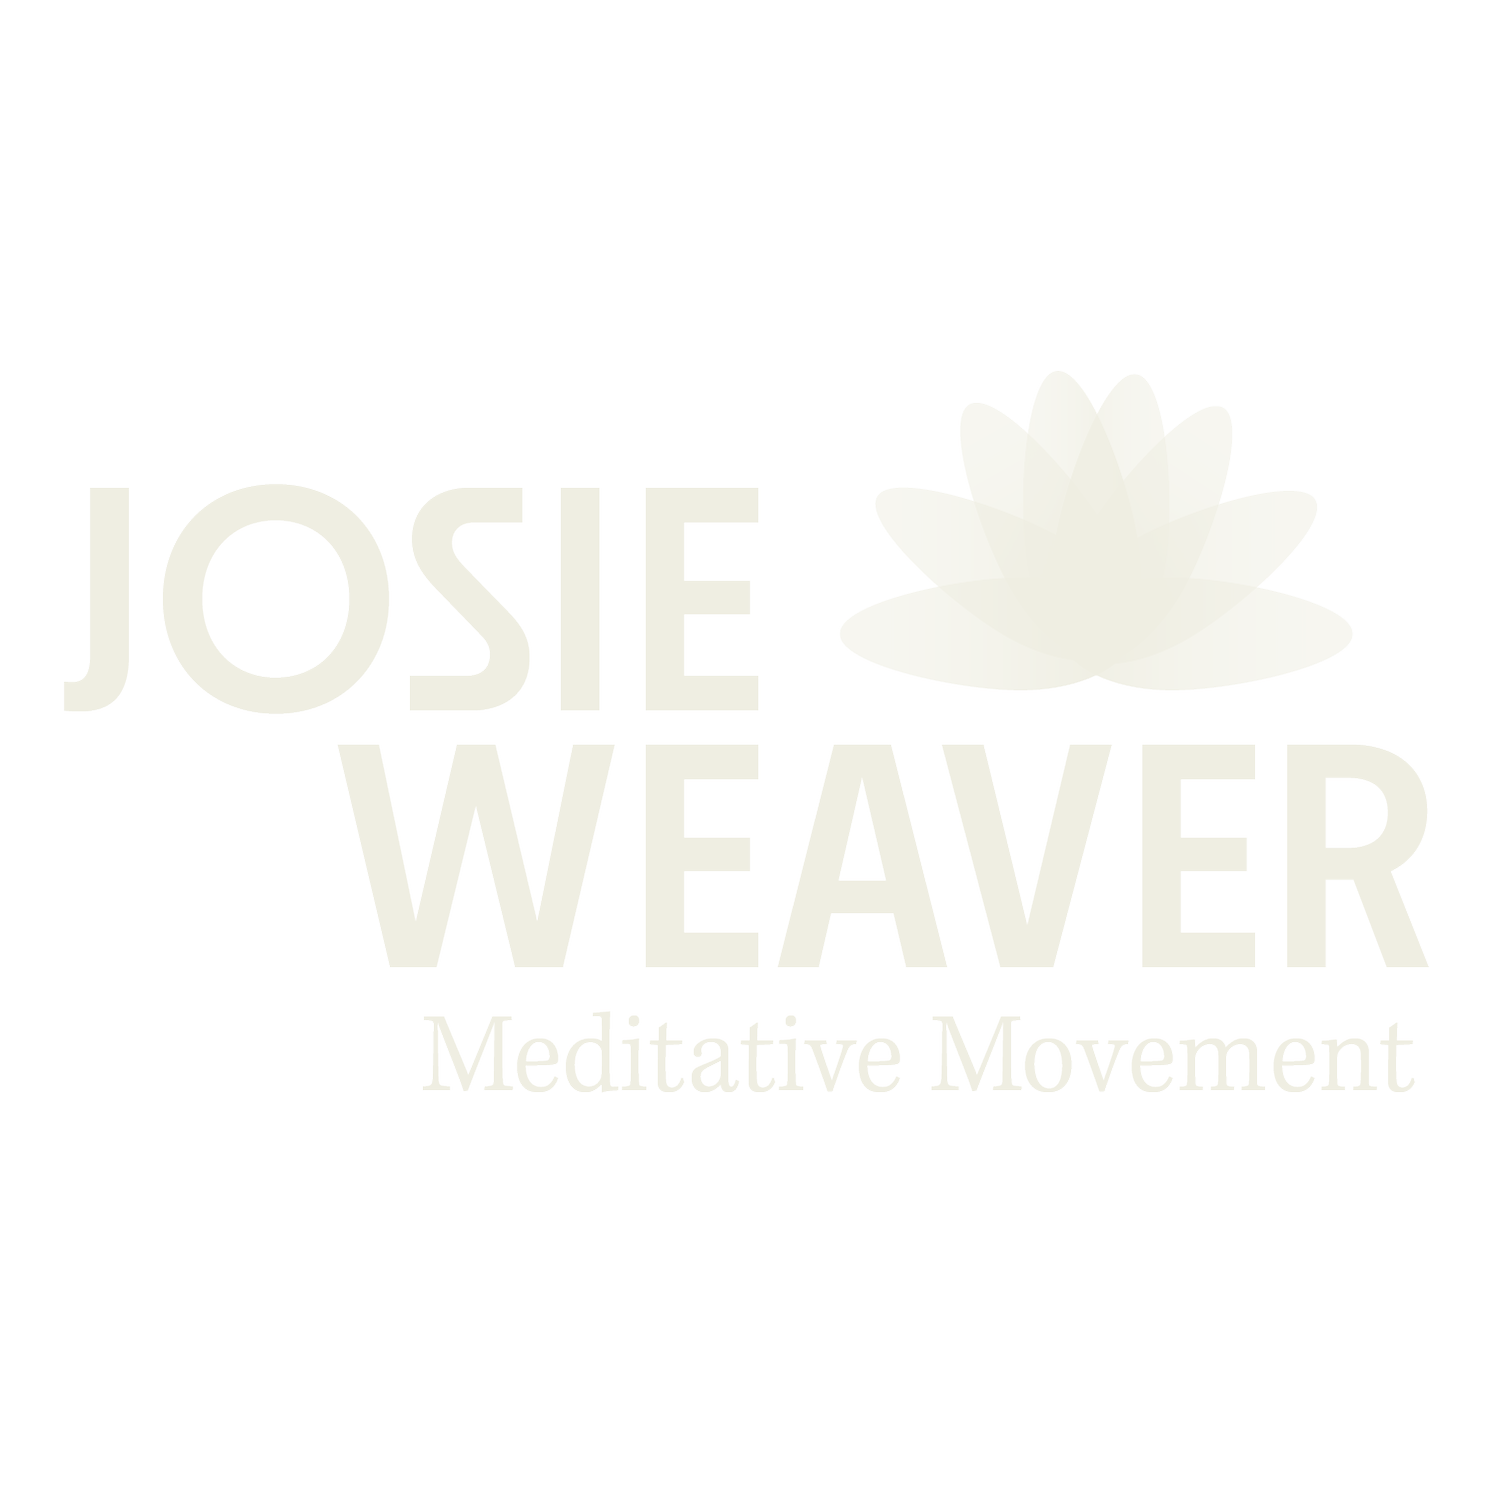 Josie Weaver